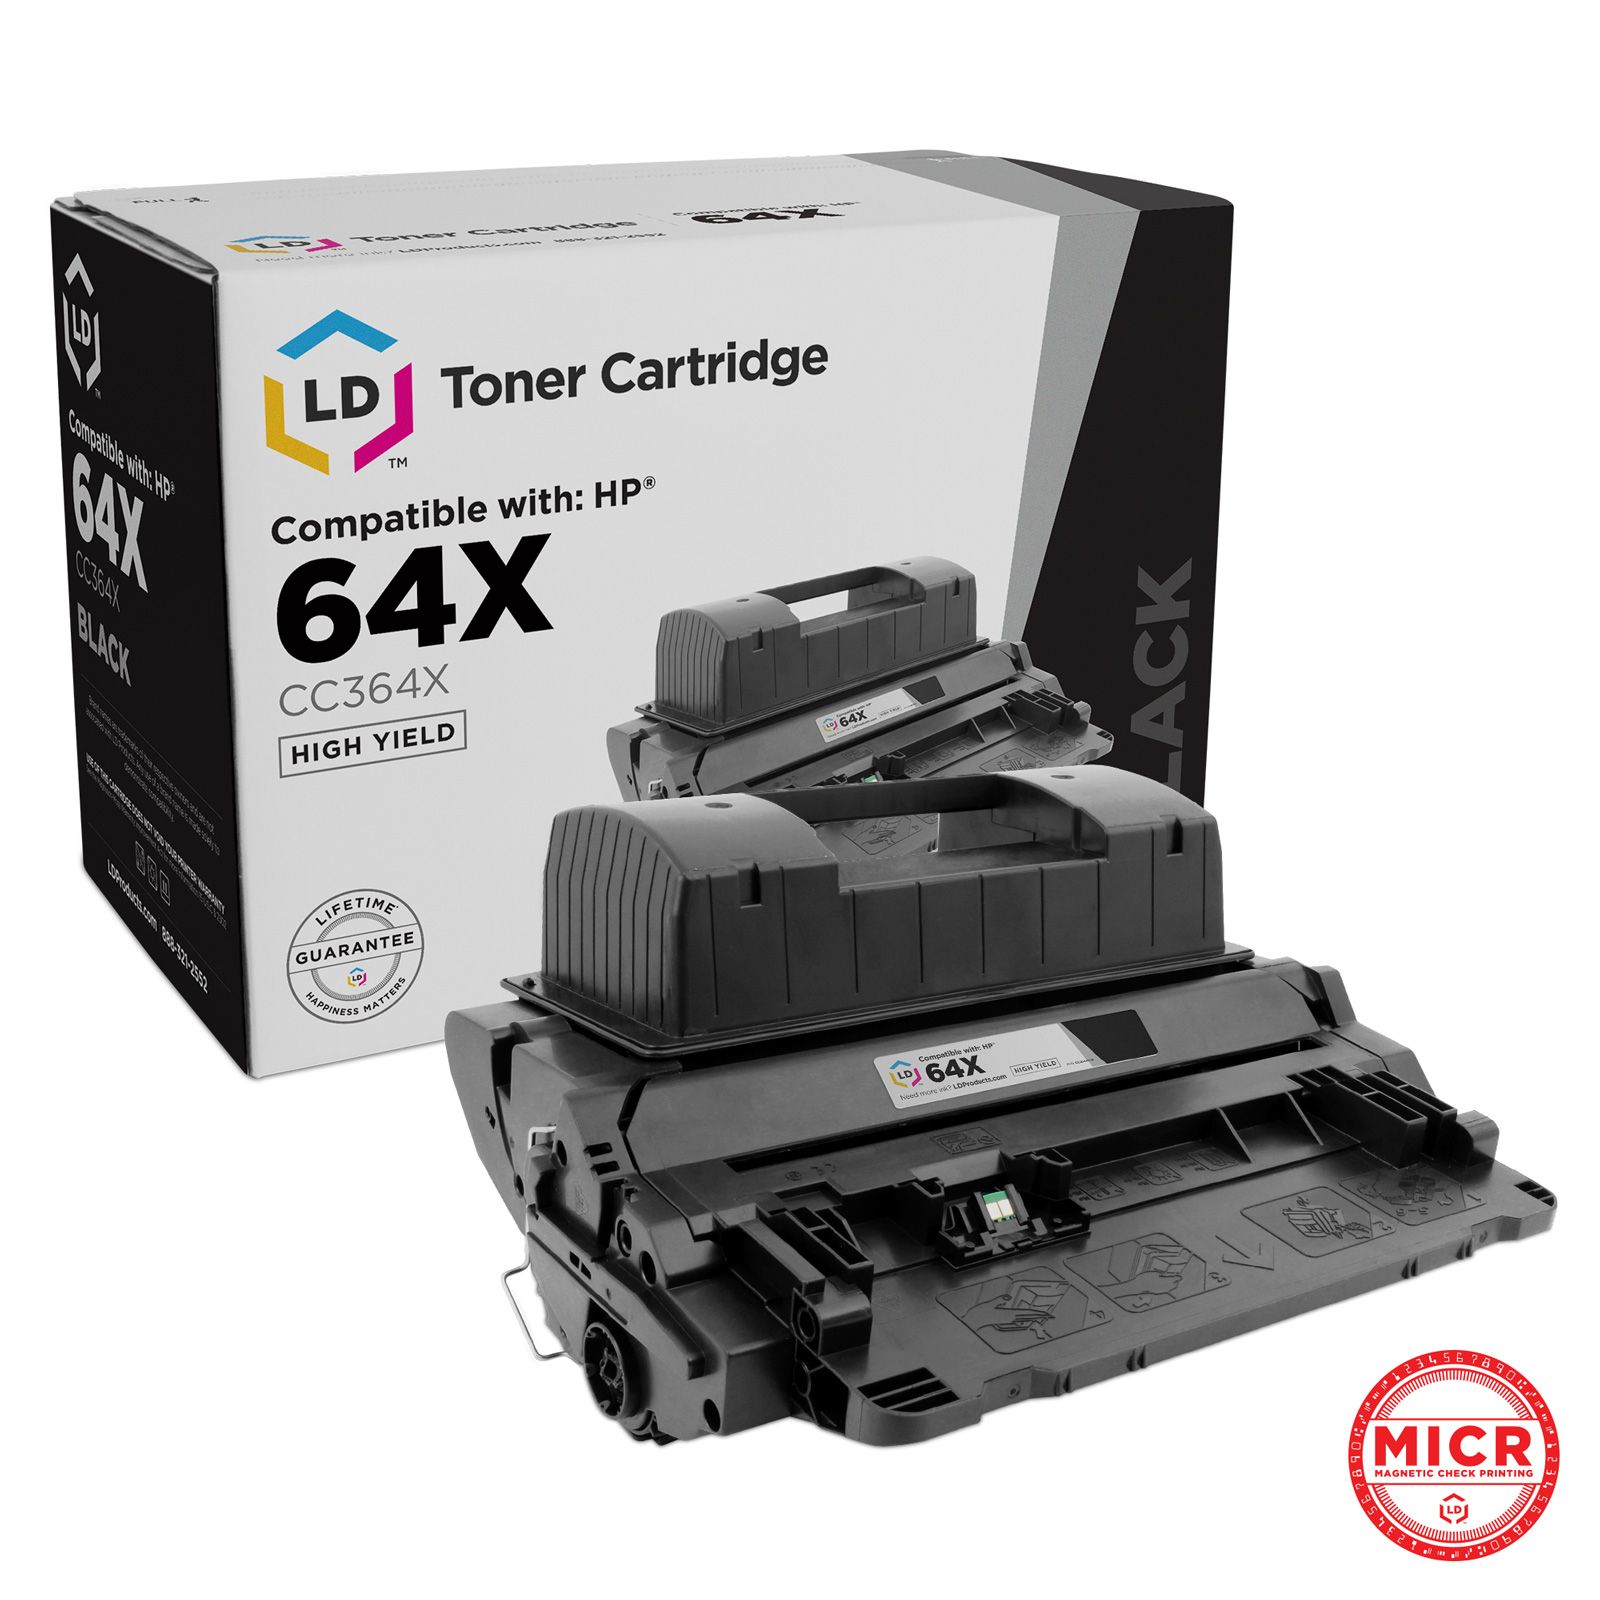 HP 64X Toner - Better Prices, Same Sharp Prints! - InkCartridges